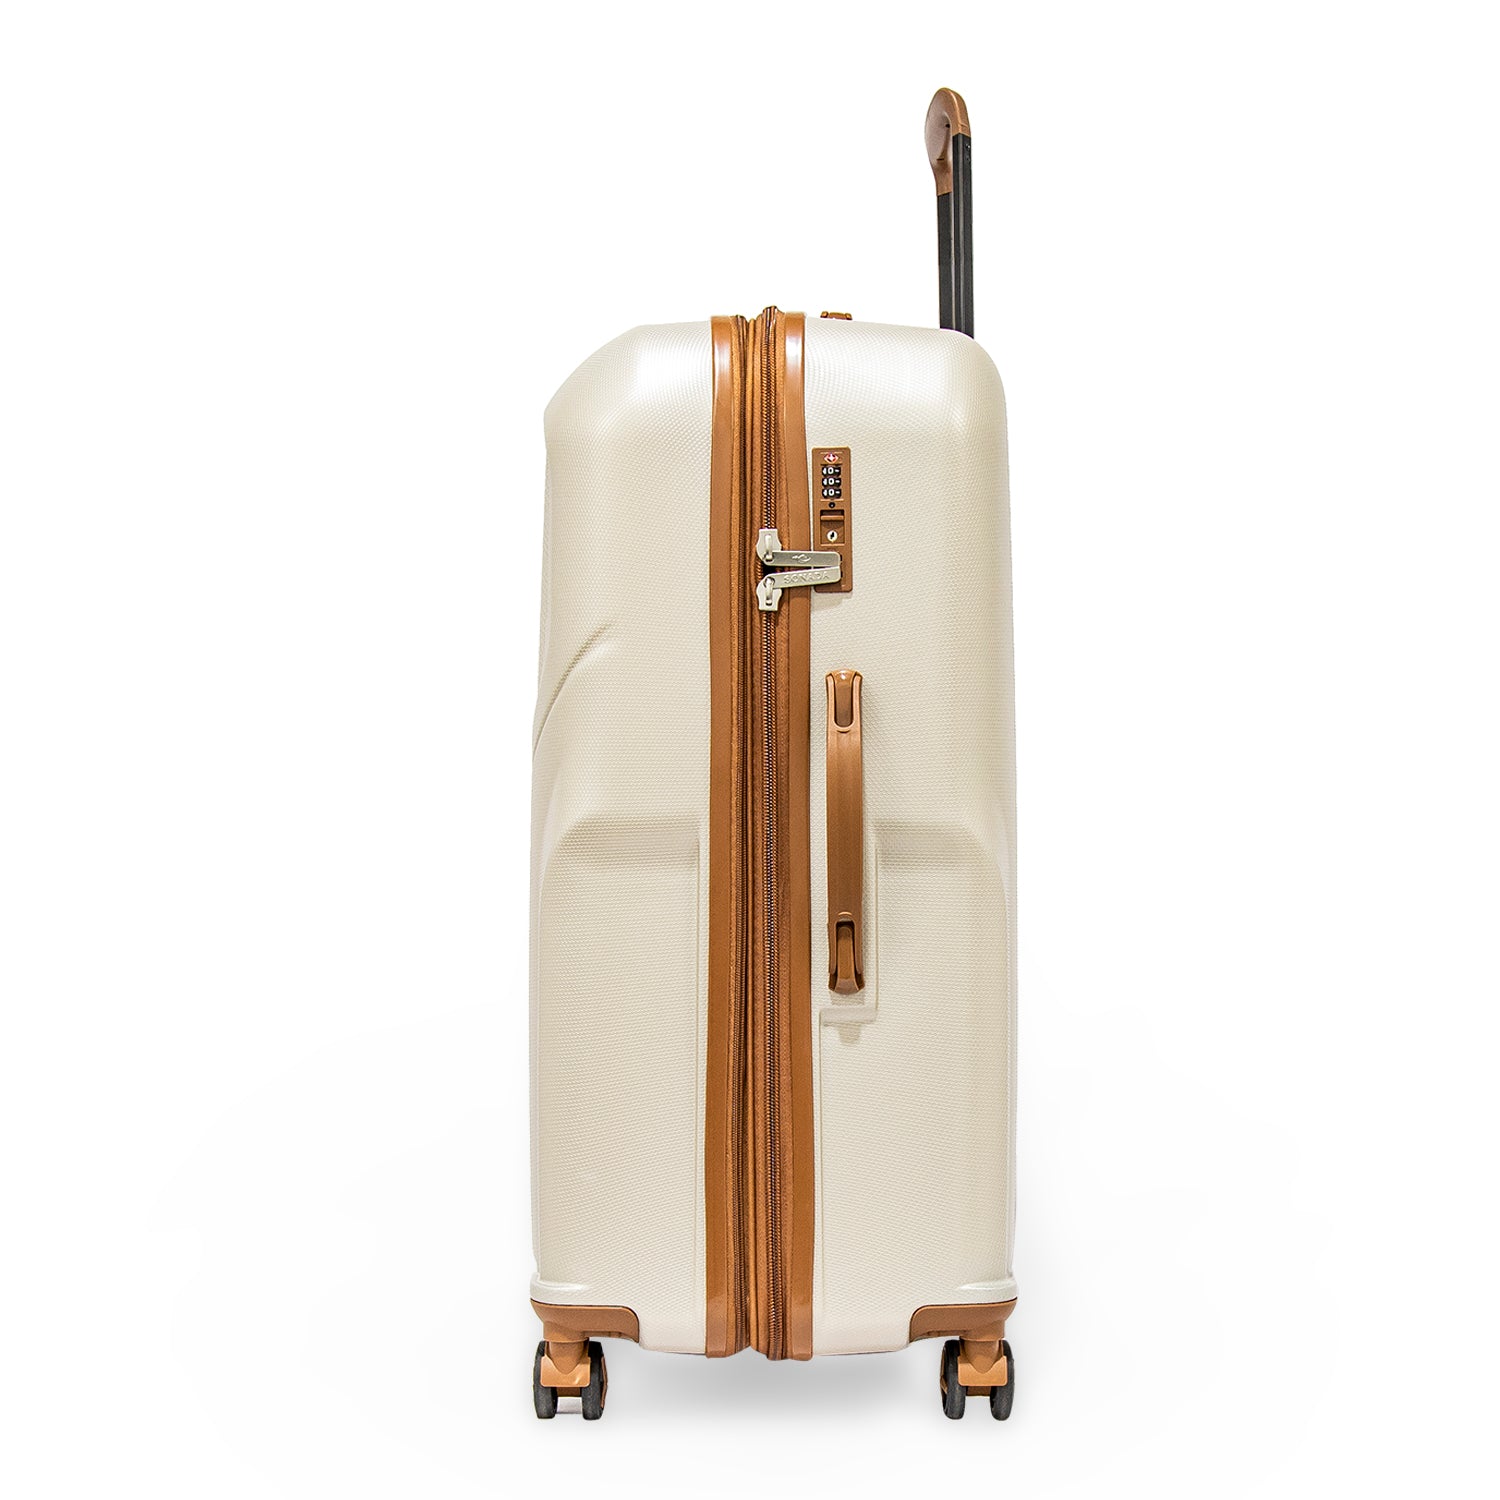 Sonada Upright Luggage Expandable Hardside Suitcase Check In Champagne